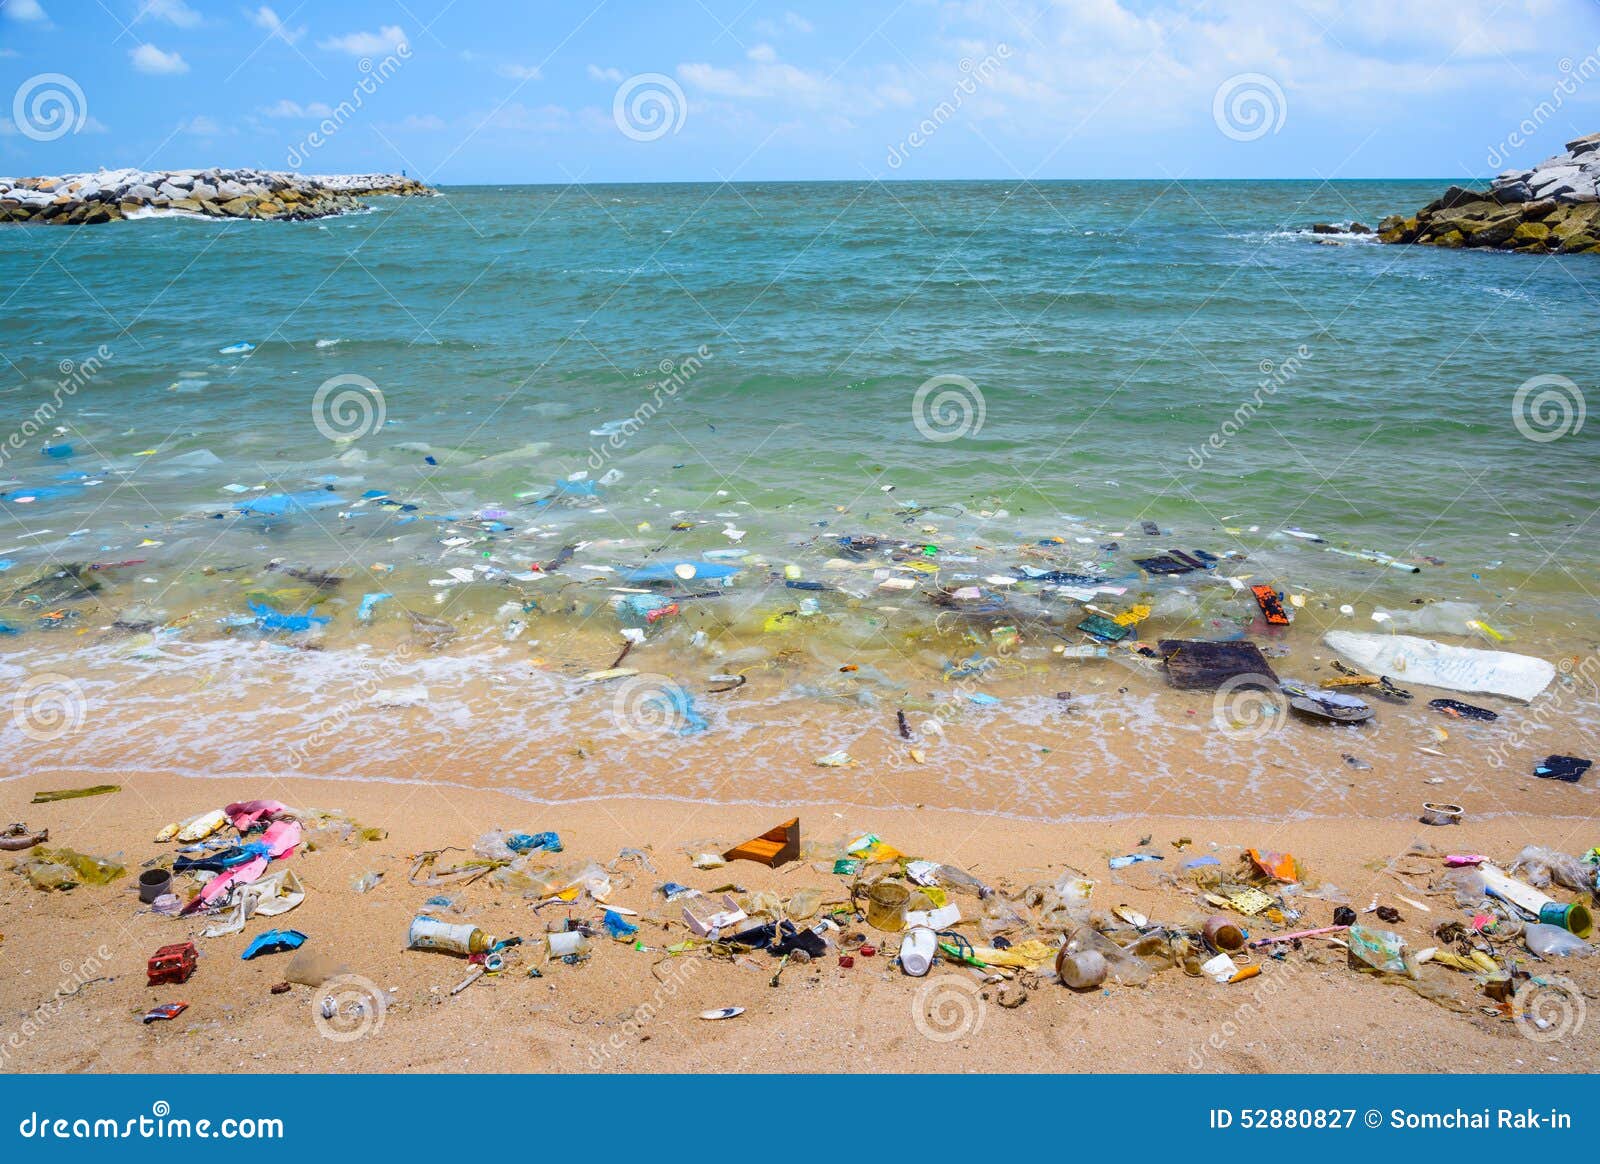 pollution on the beach of tropical sea.